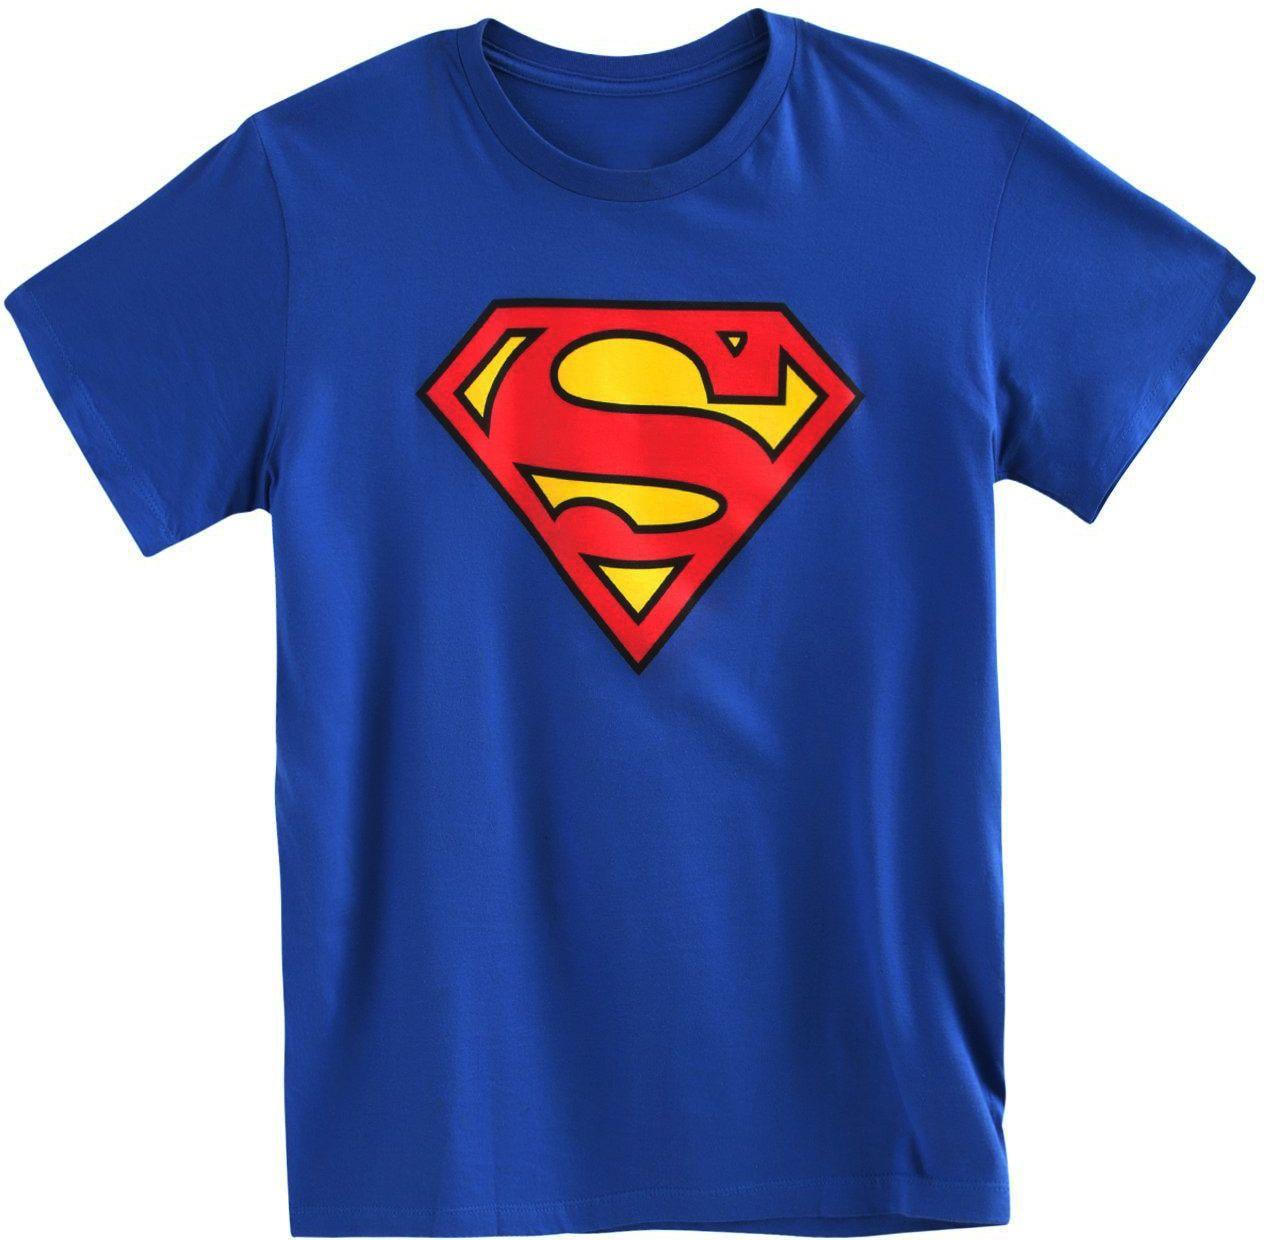 Glow in the Dark Superman Logo - Superman Classic Blue Glow in the Dark Logo Men's T-Shirt ...